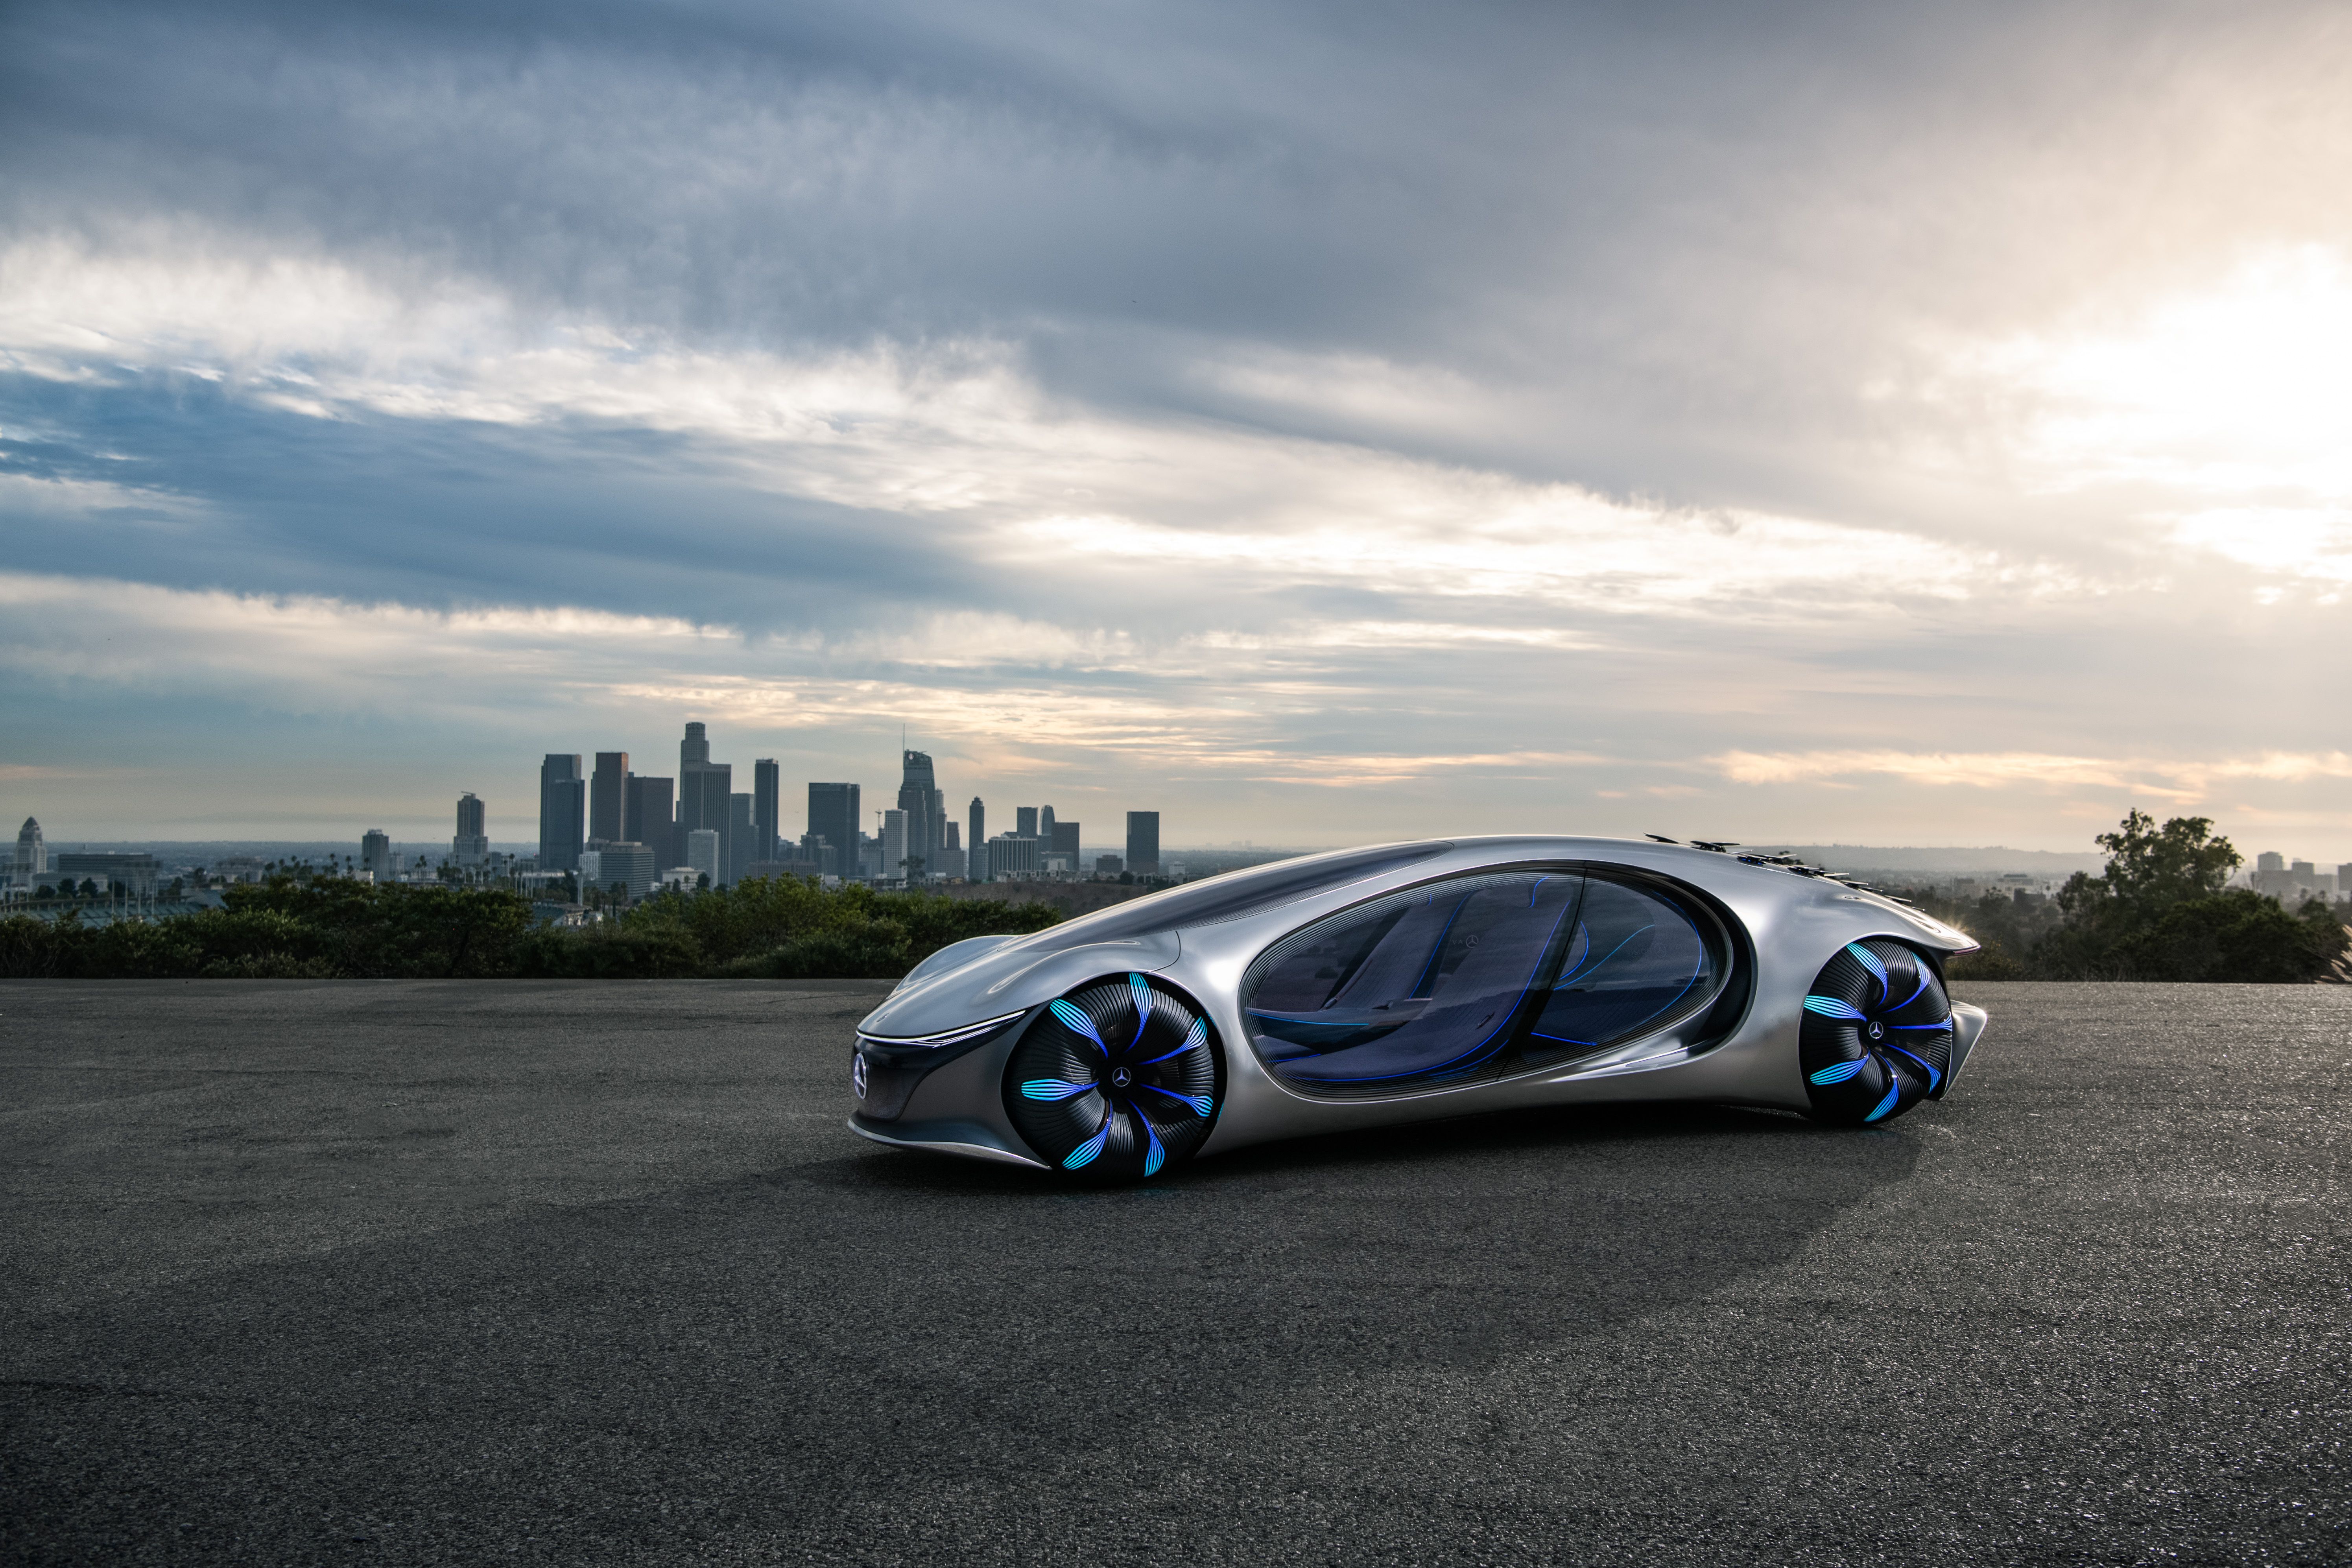 MercedesBenz unveils Avatarinspired concept car at CES 2020